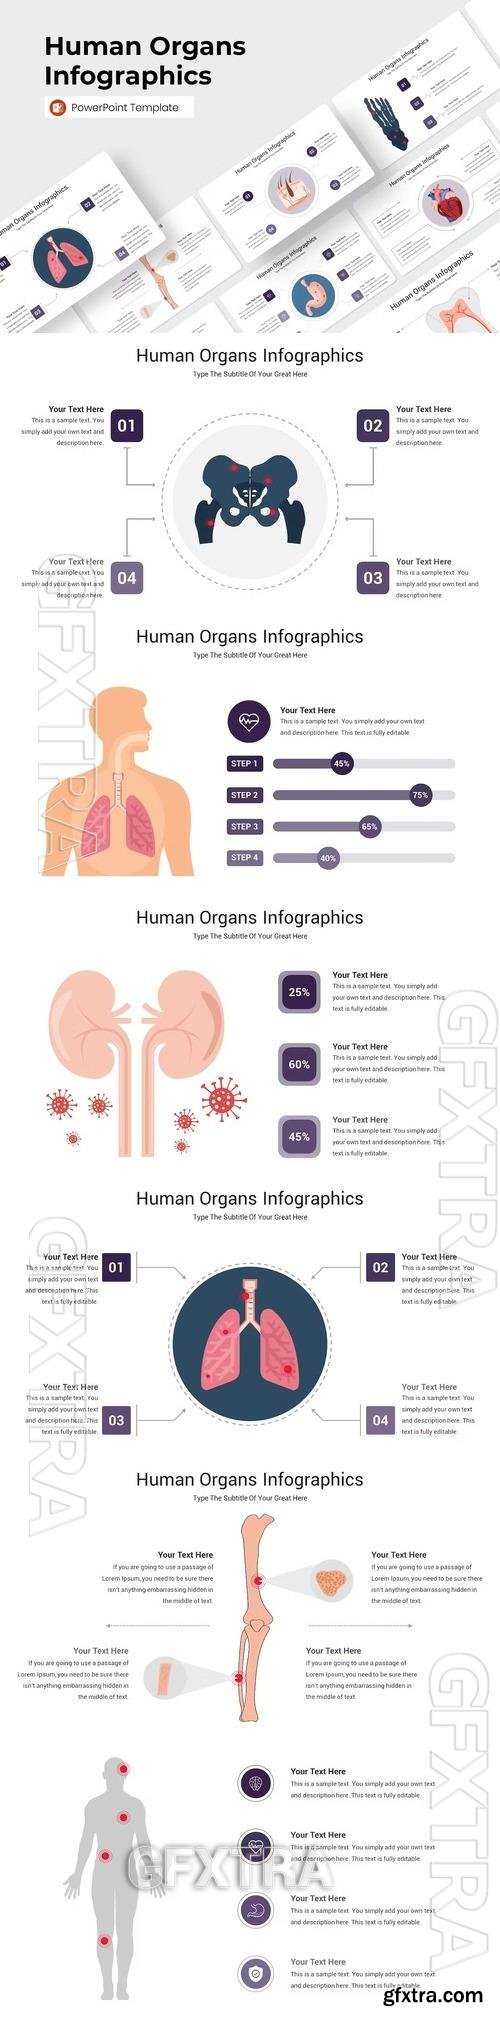 Human Organs Infographics PowerPoint Template AY5XUDE